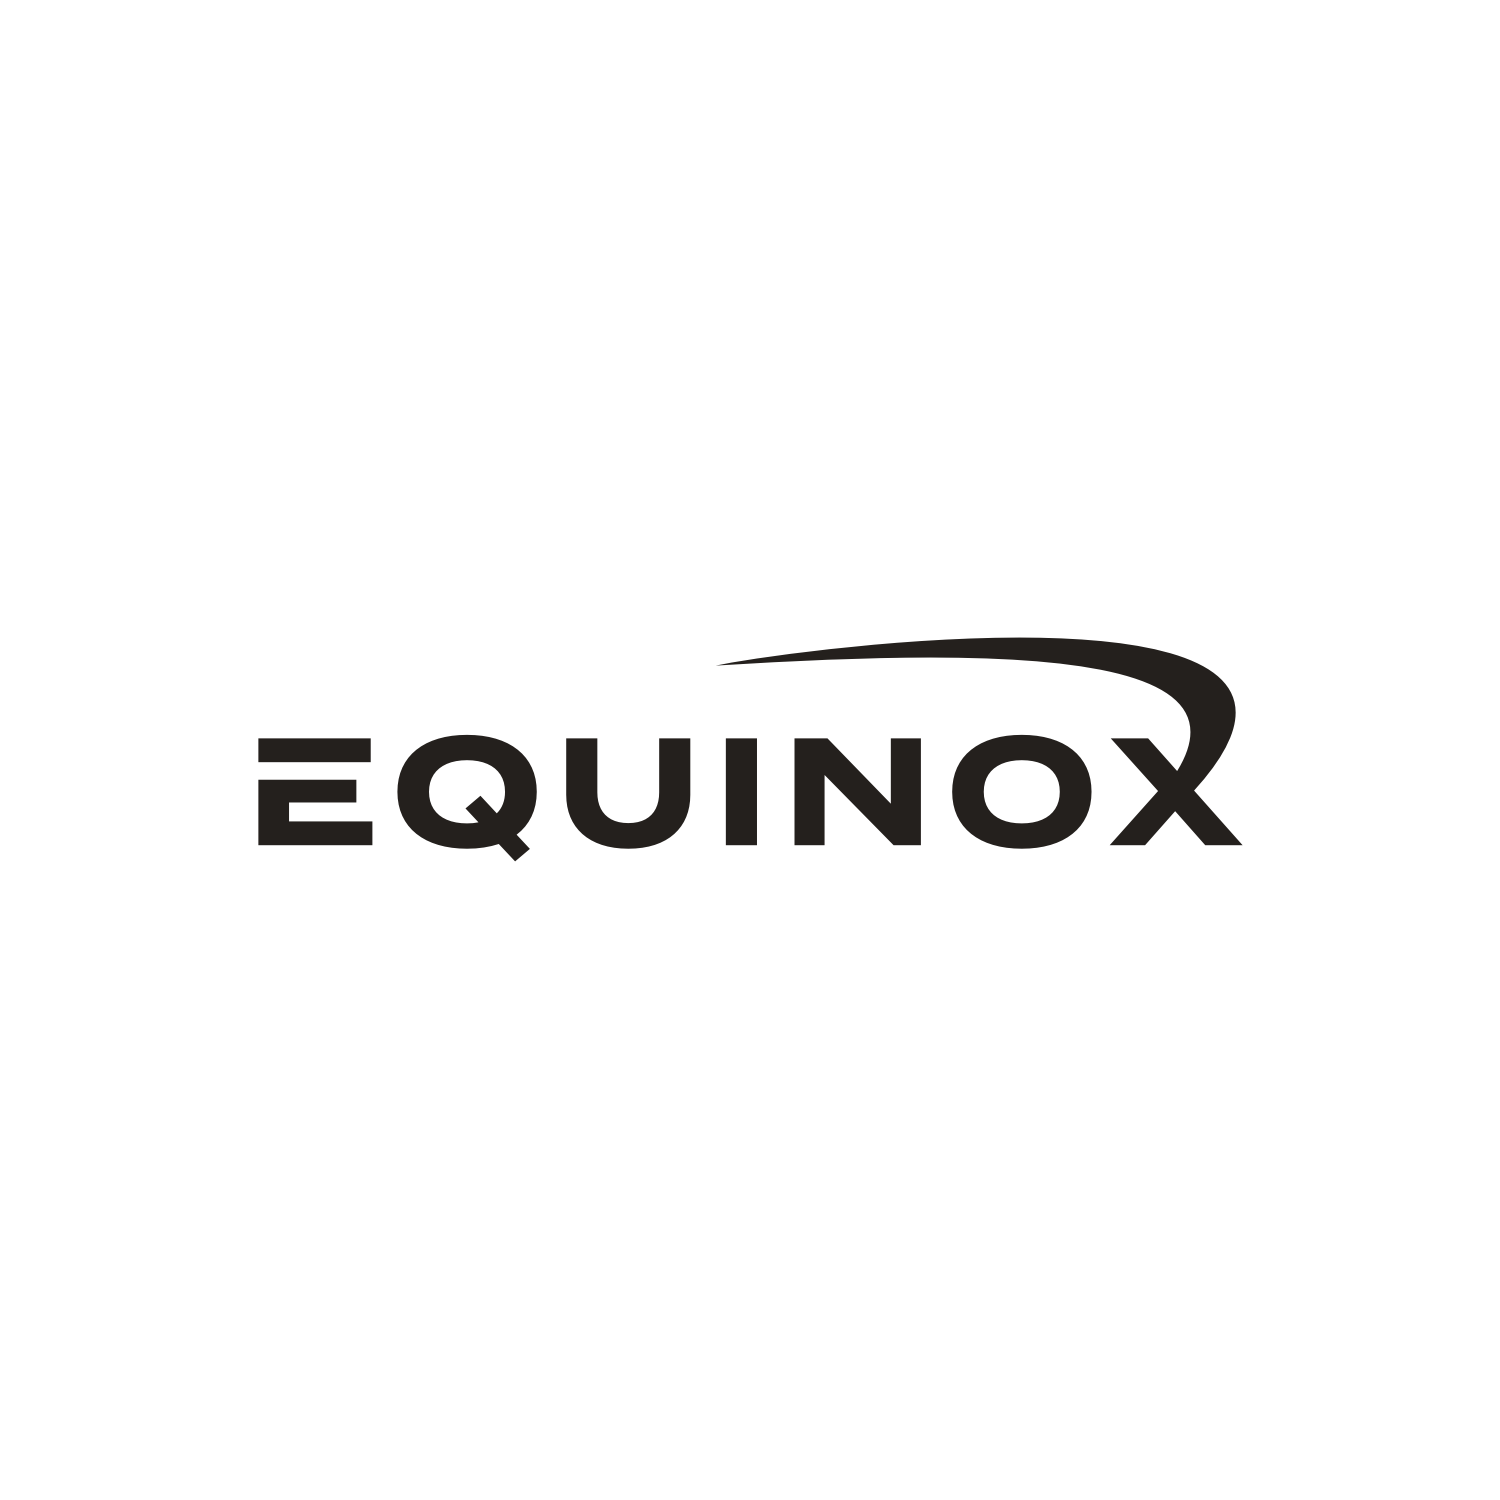 Equinox Logo - Masculine, Bold, Sporting Good Logo Design for Equinox by Zzamiq ...